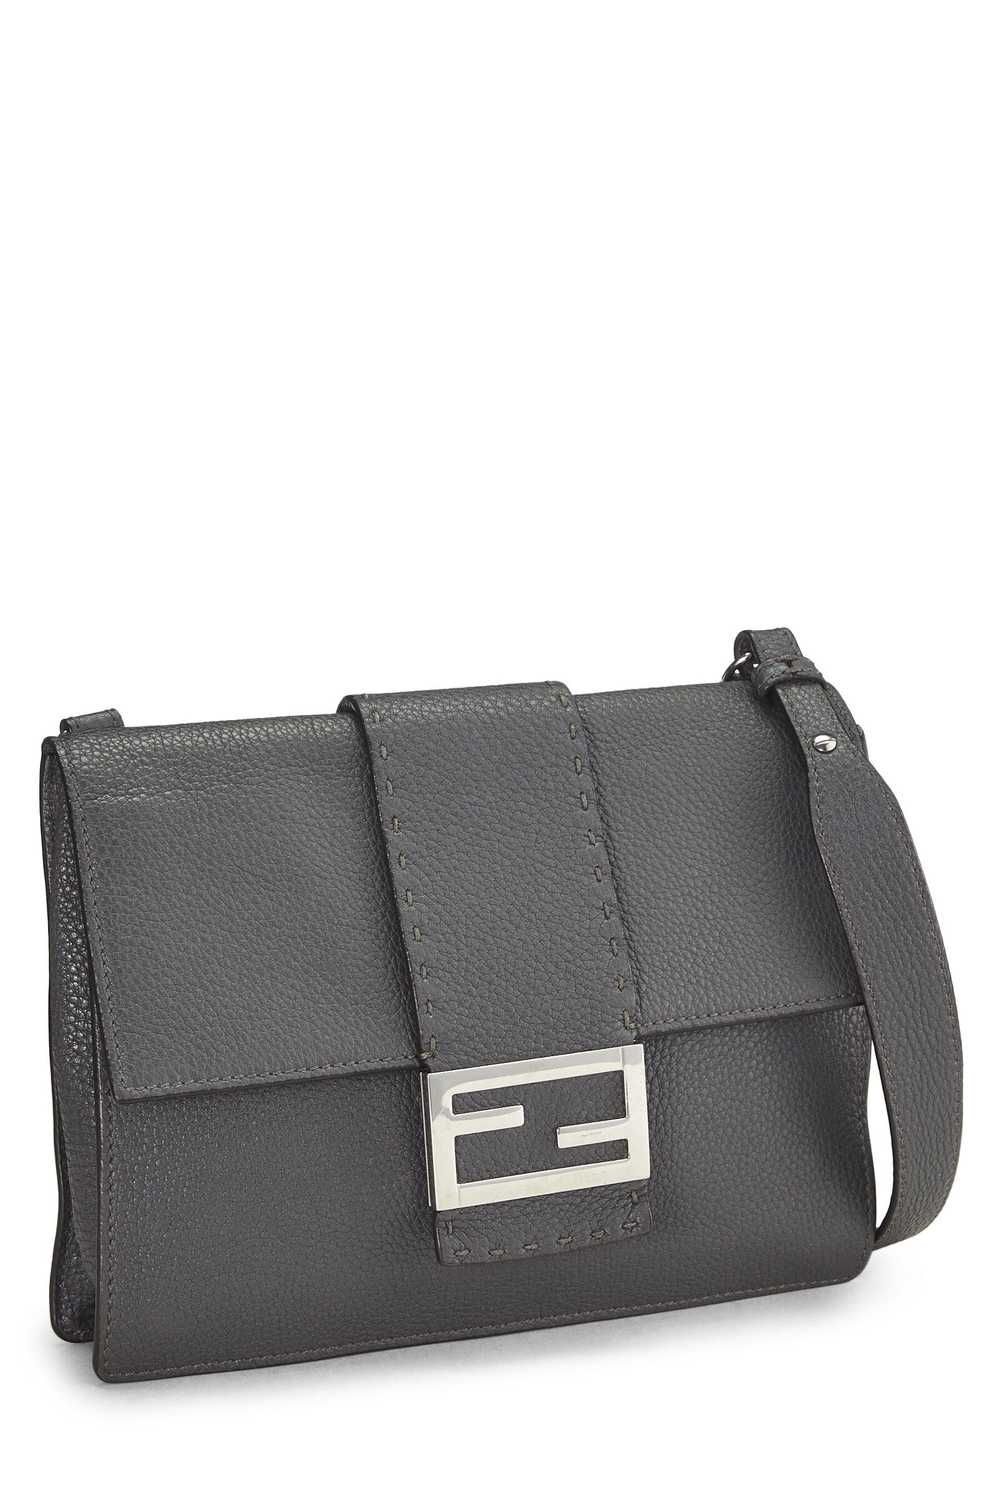 Grey Leather Flat Baguette Bag Medium - image 2